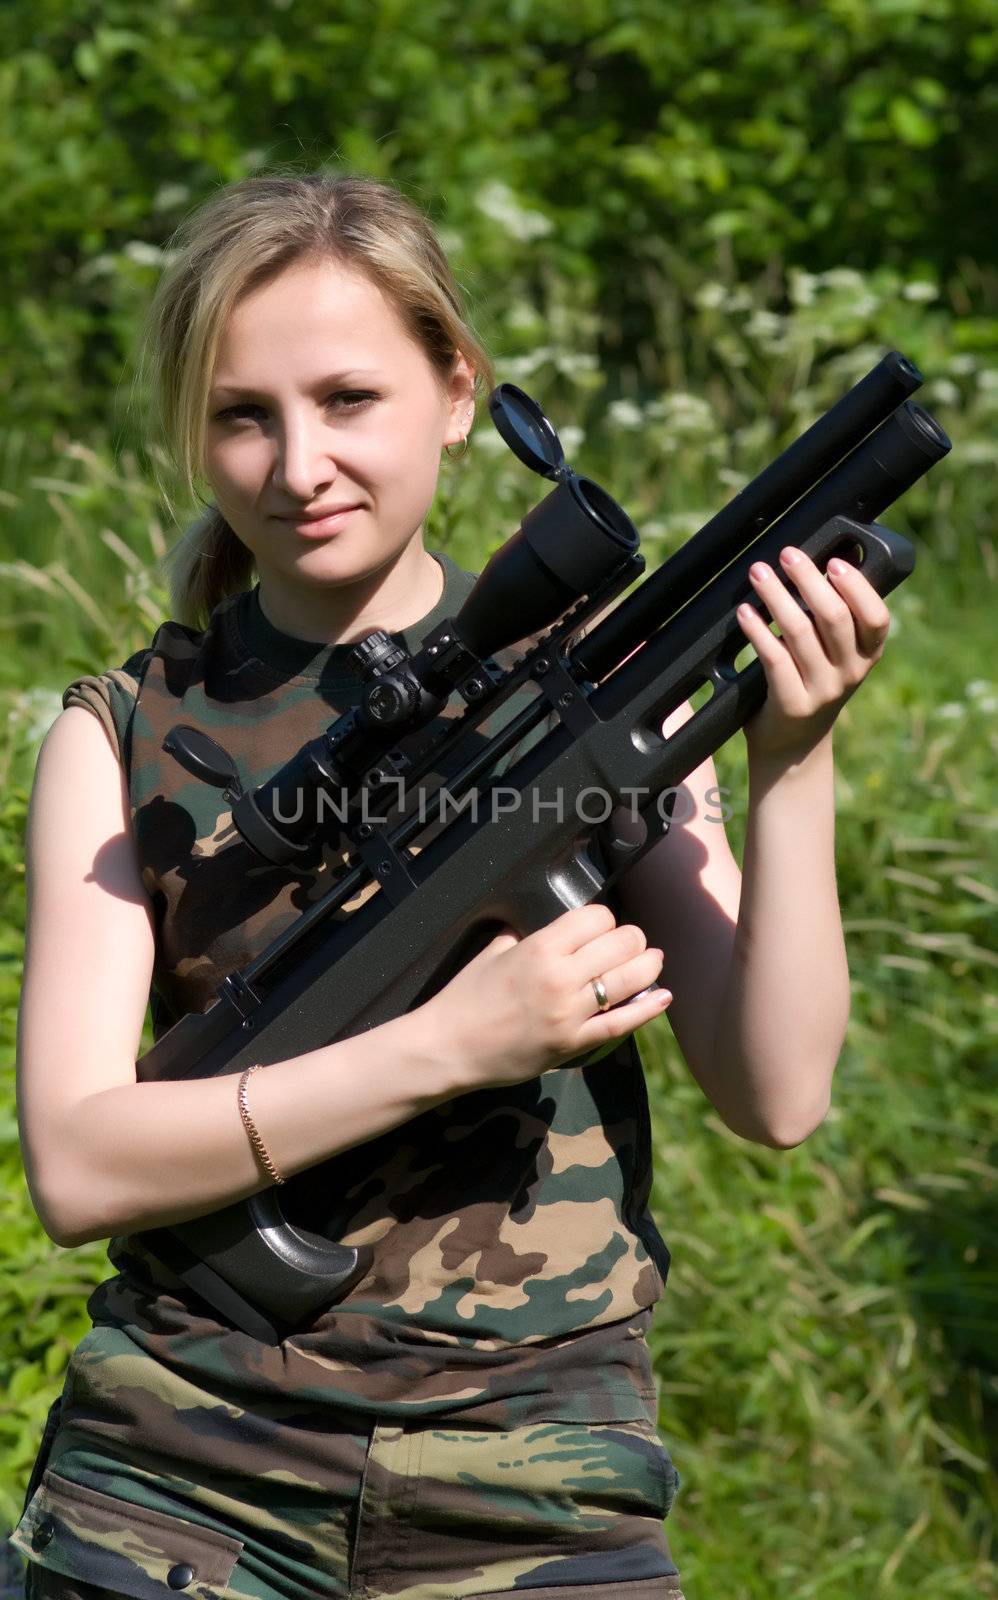 The girl with an air rifle. by kromeshnik